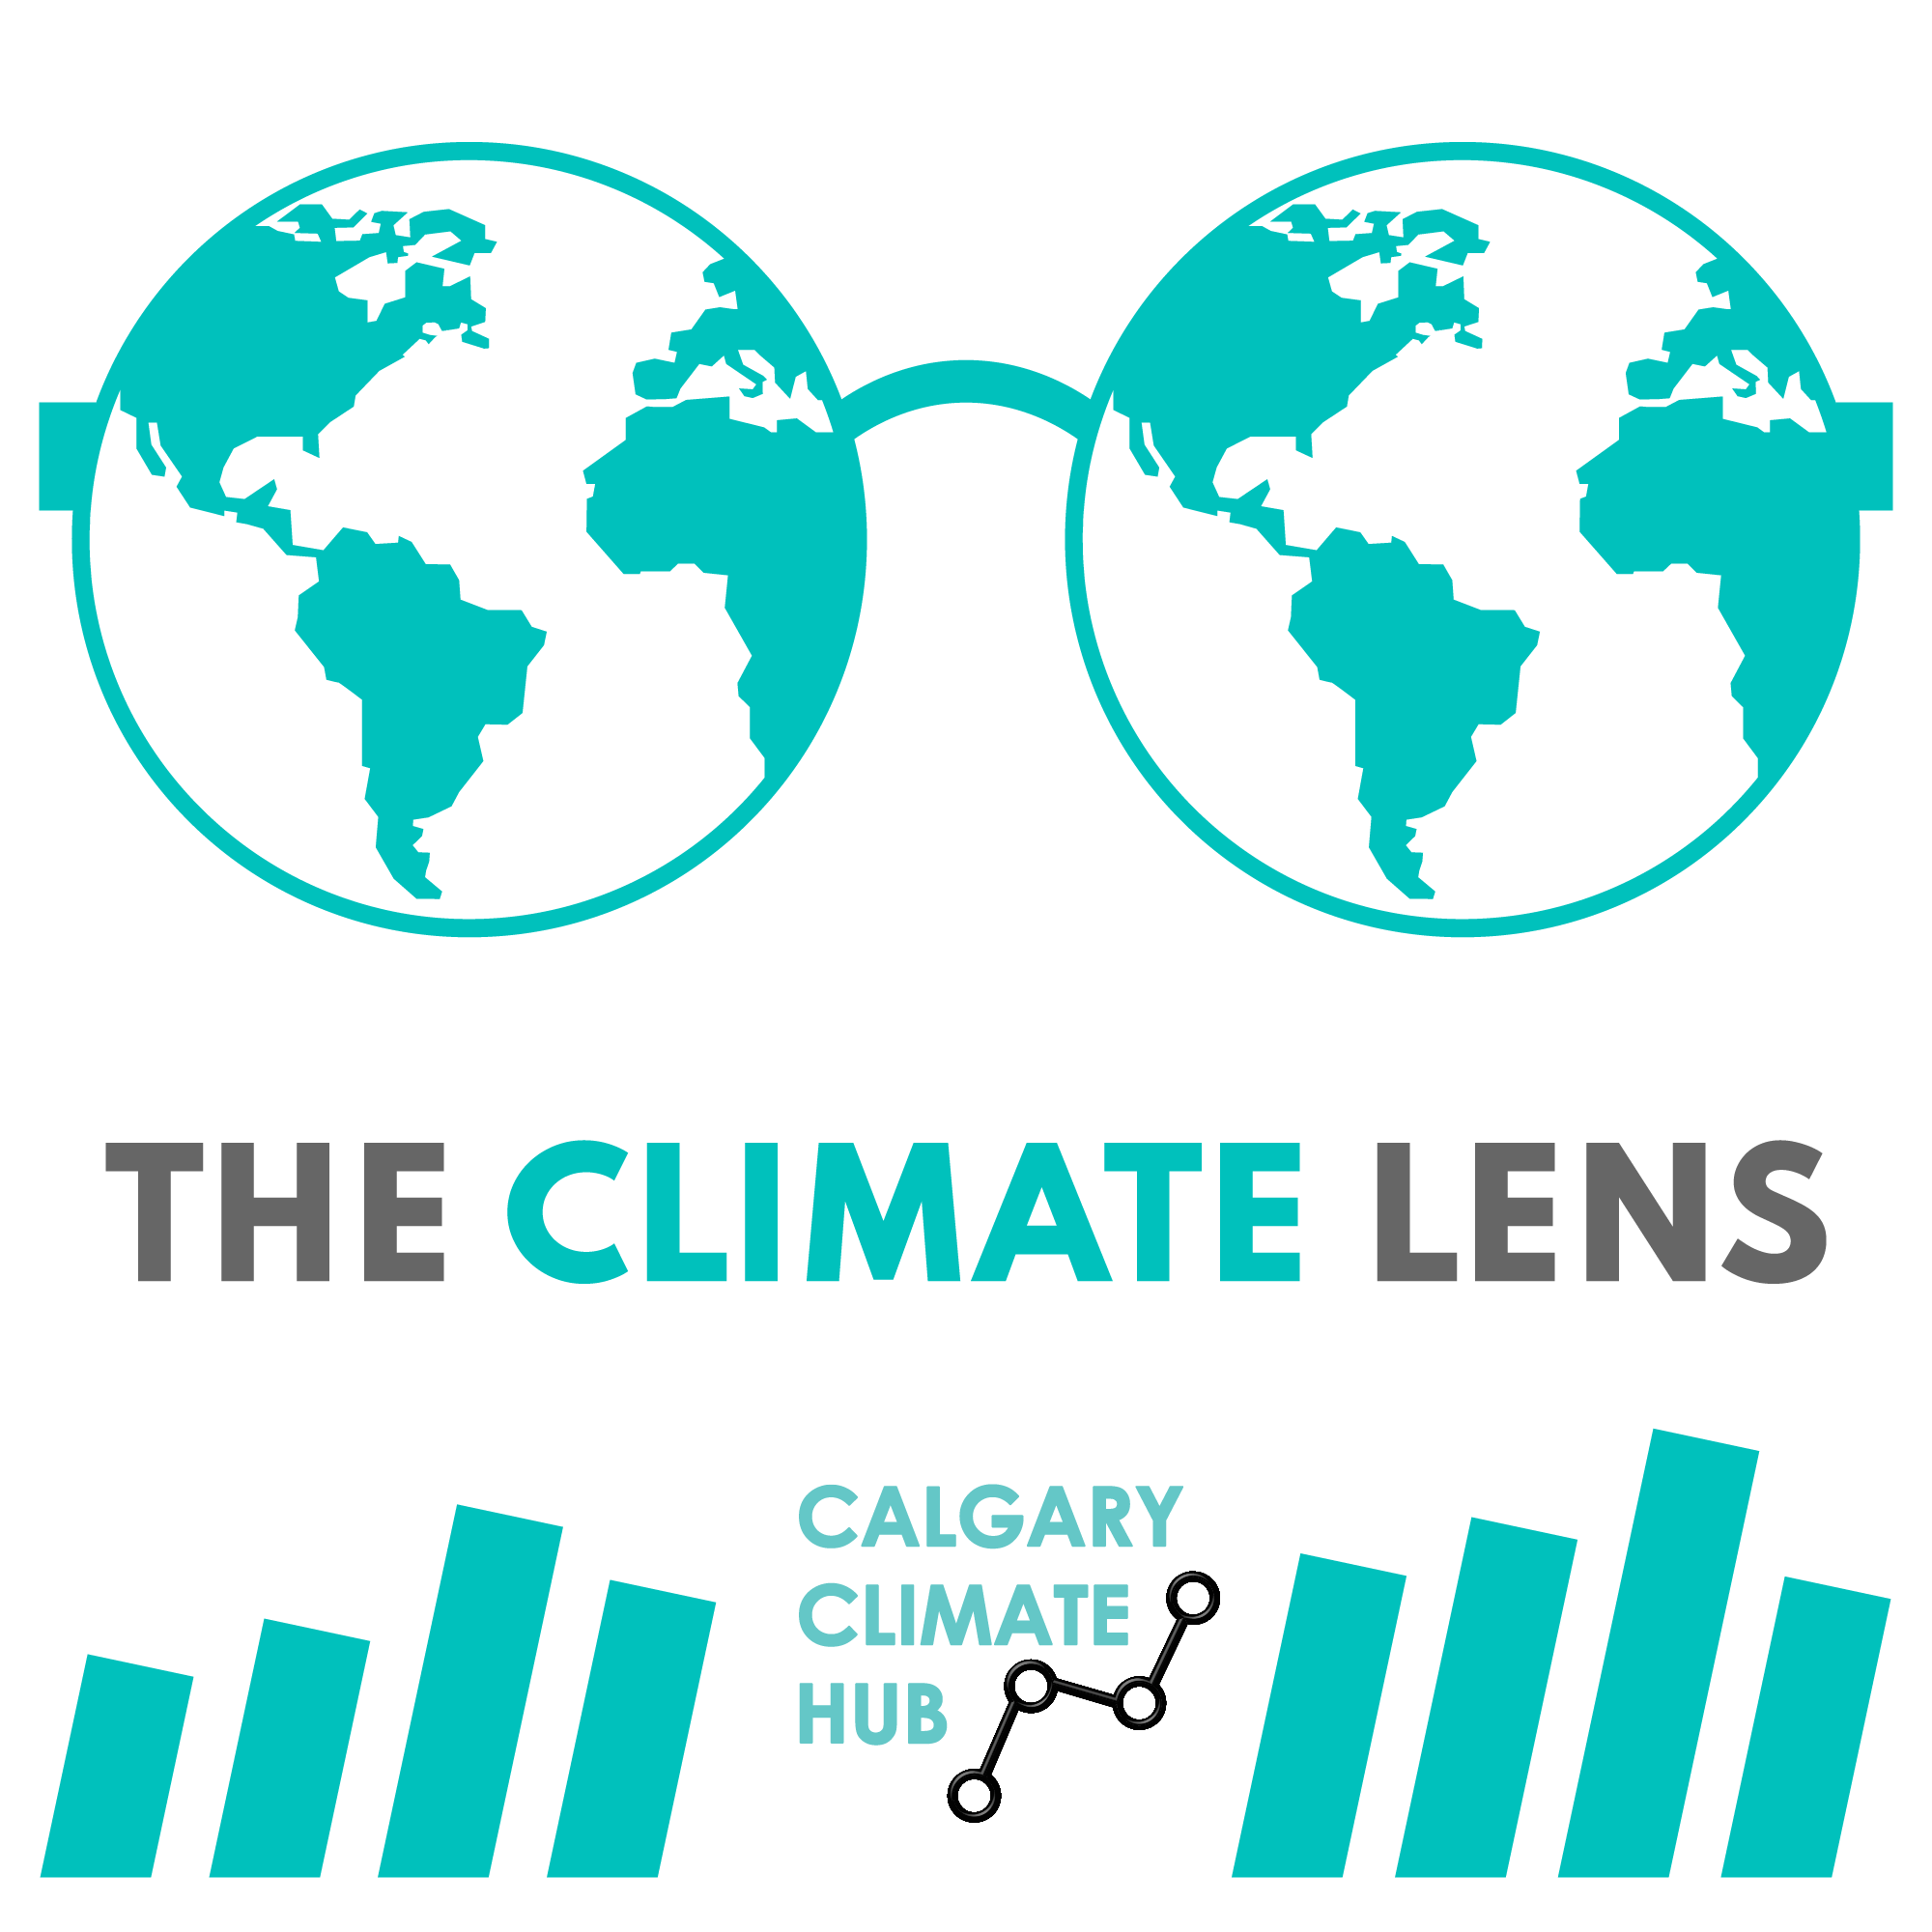 Calgary Climate Hub logo